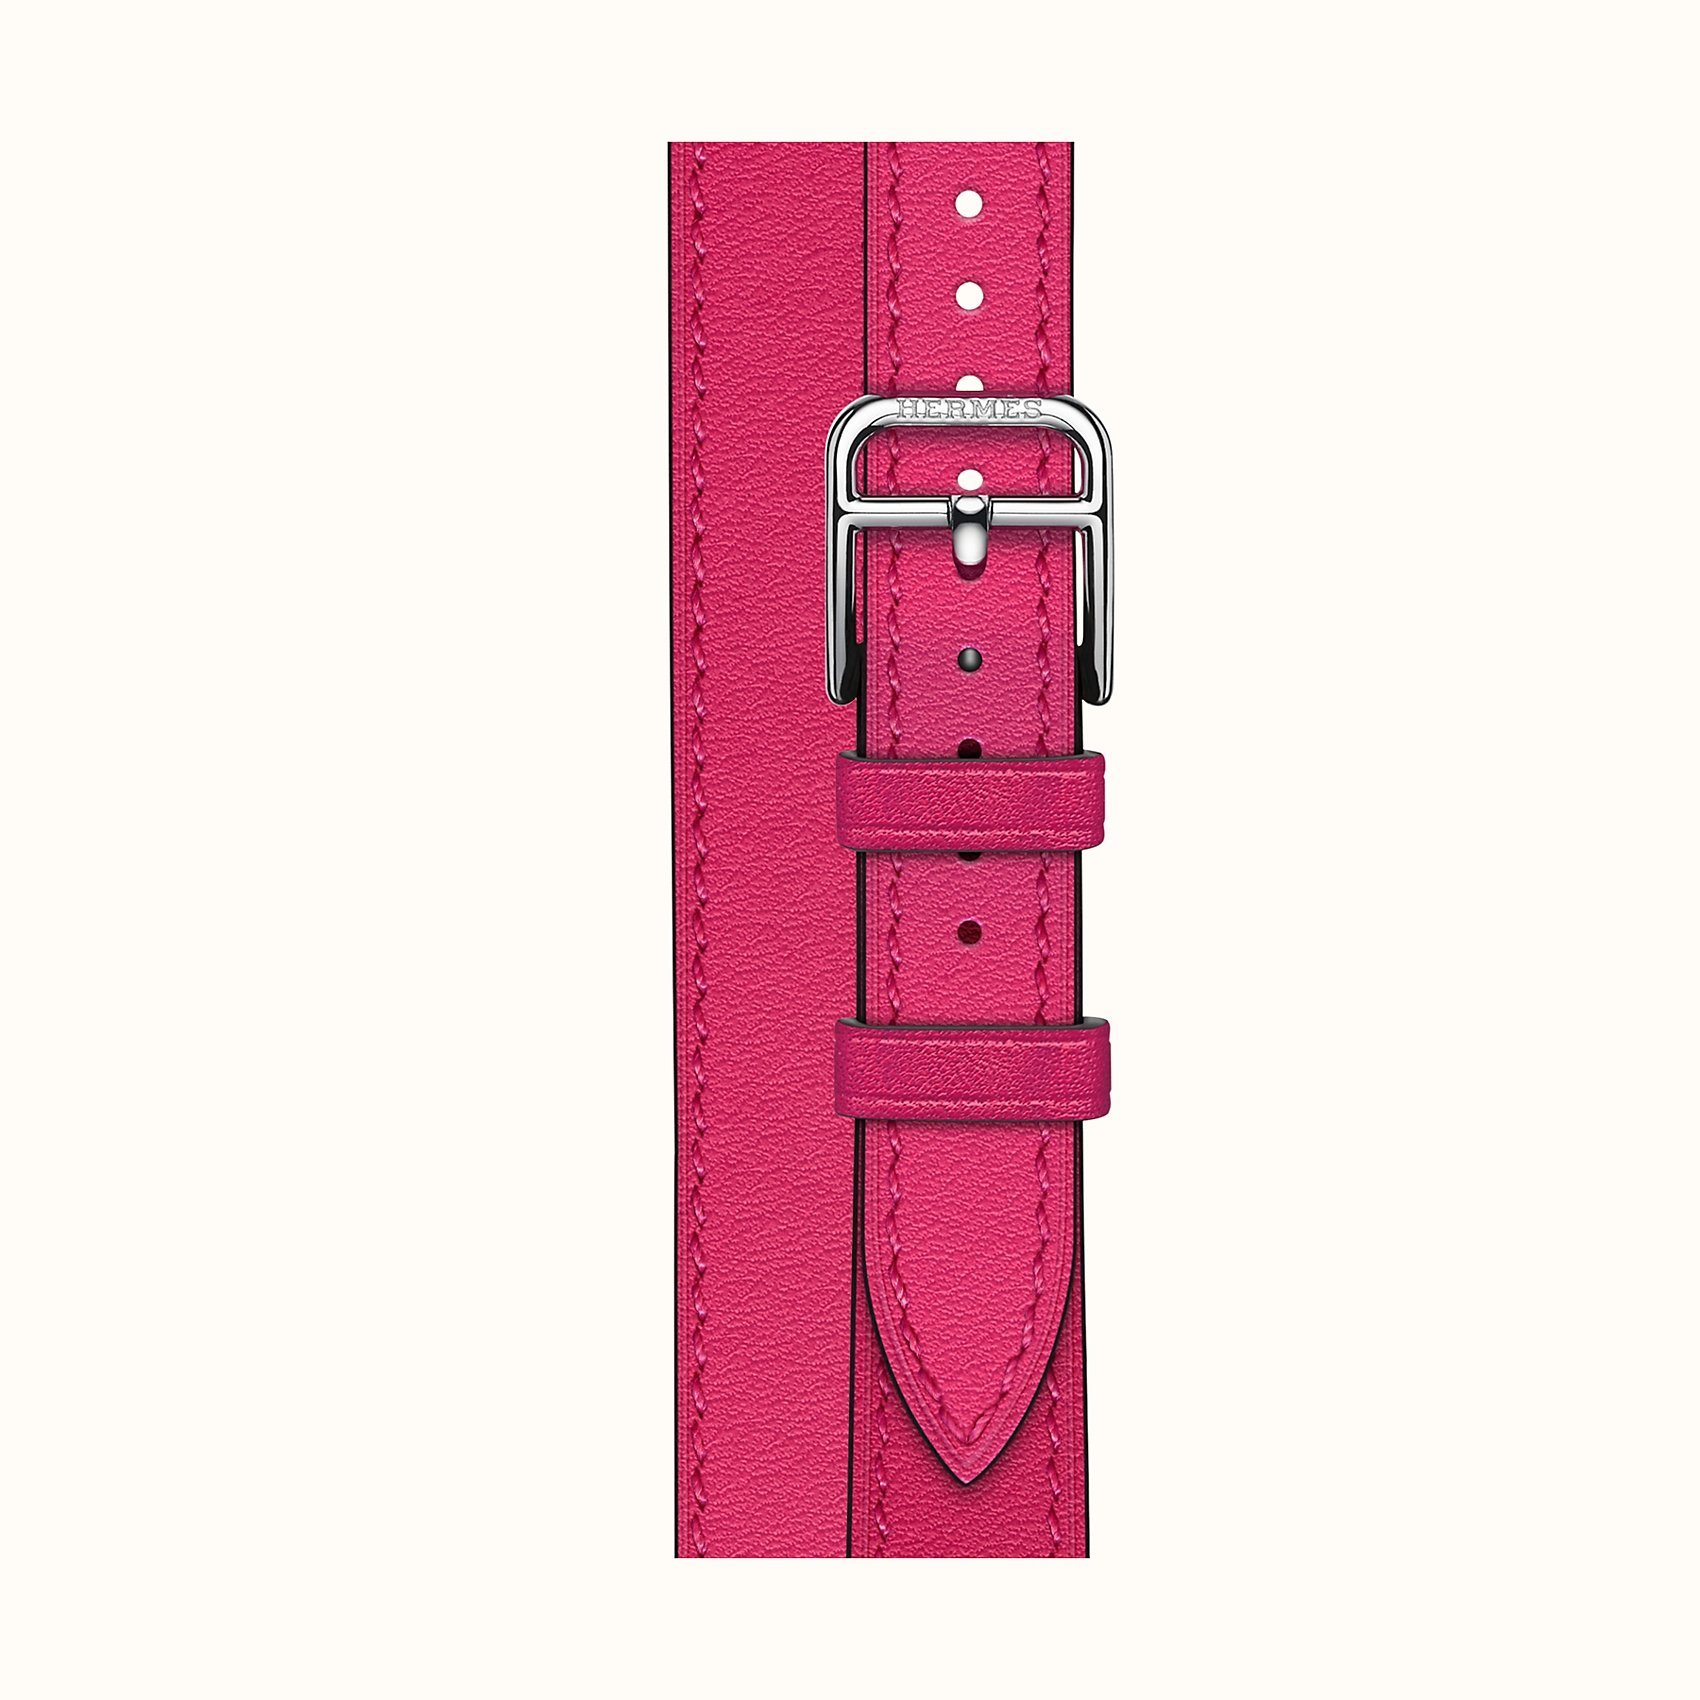 Hermès Color Guide: Pink Obsession